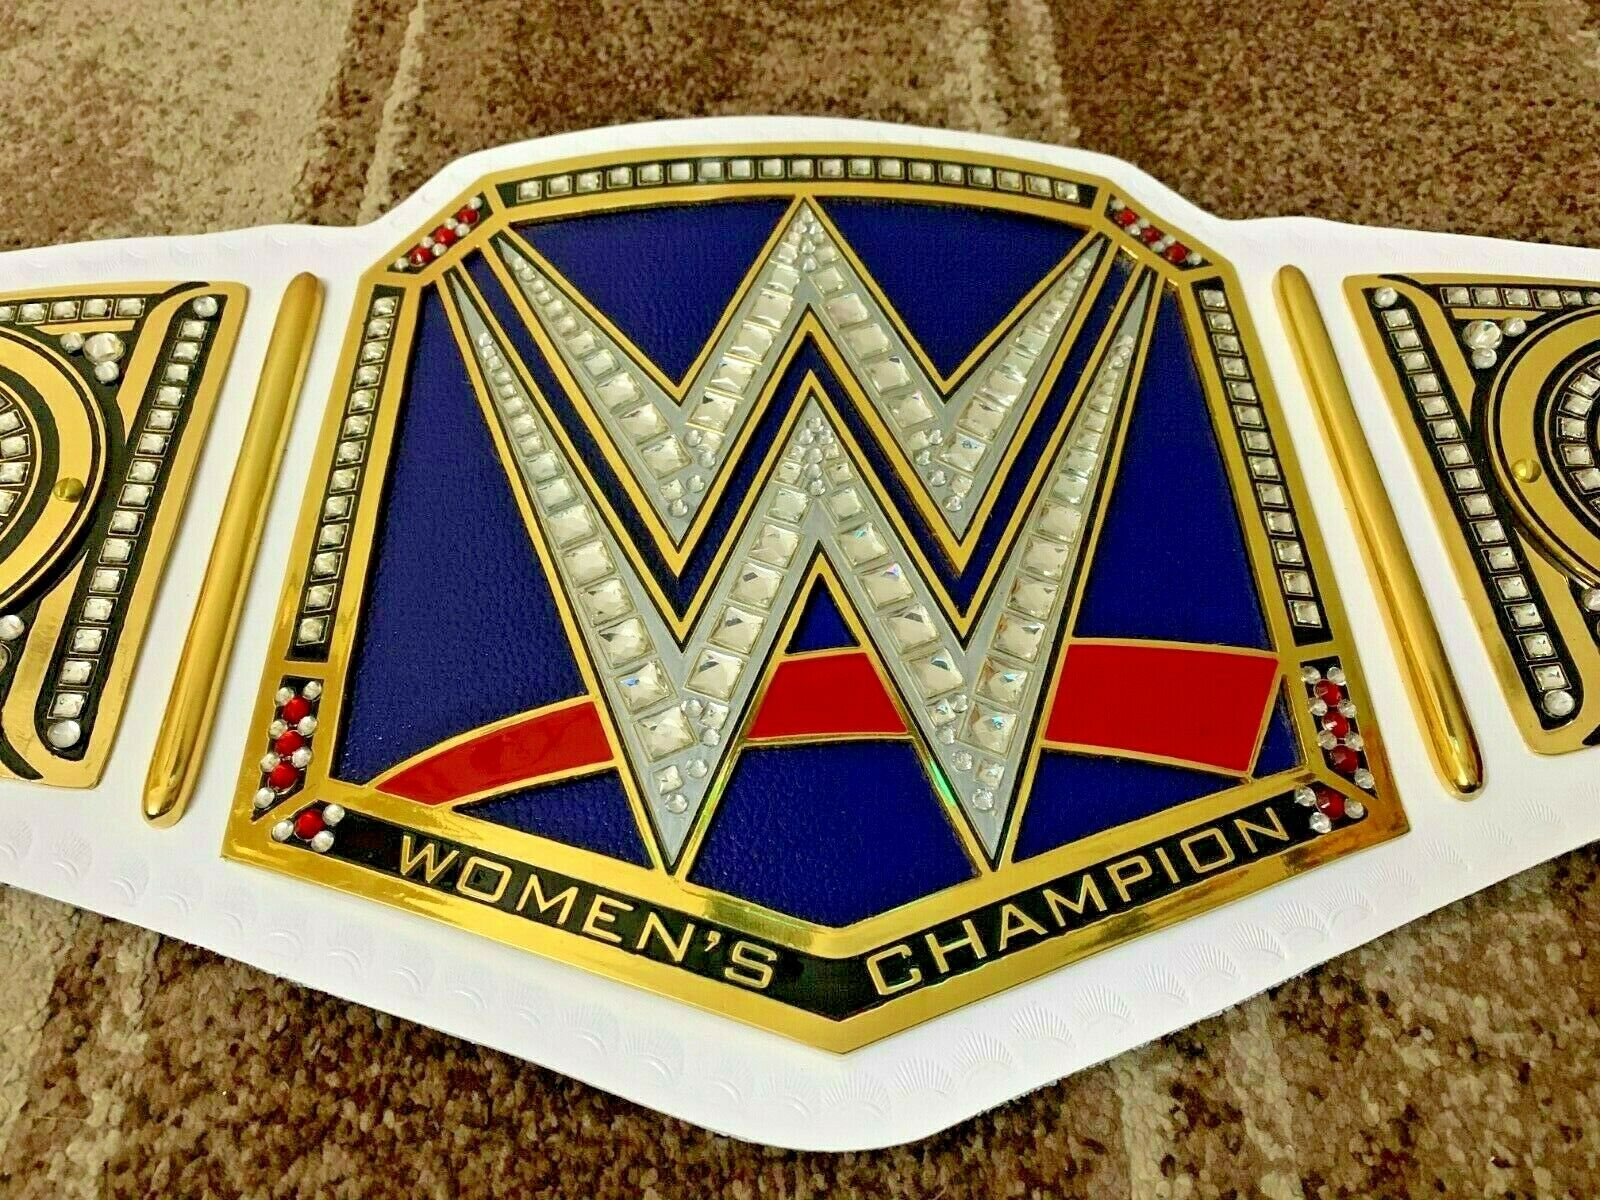 WWE WOMEN's Wrestling championship belt